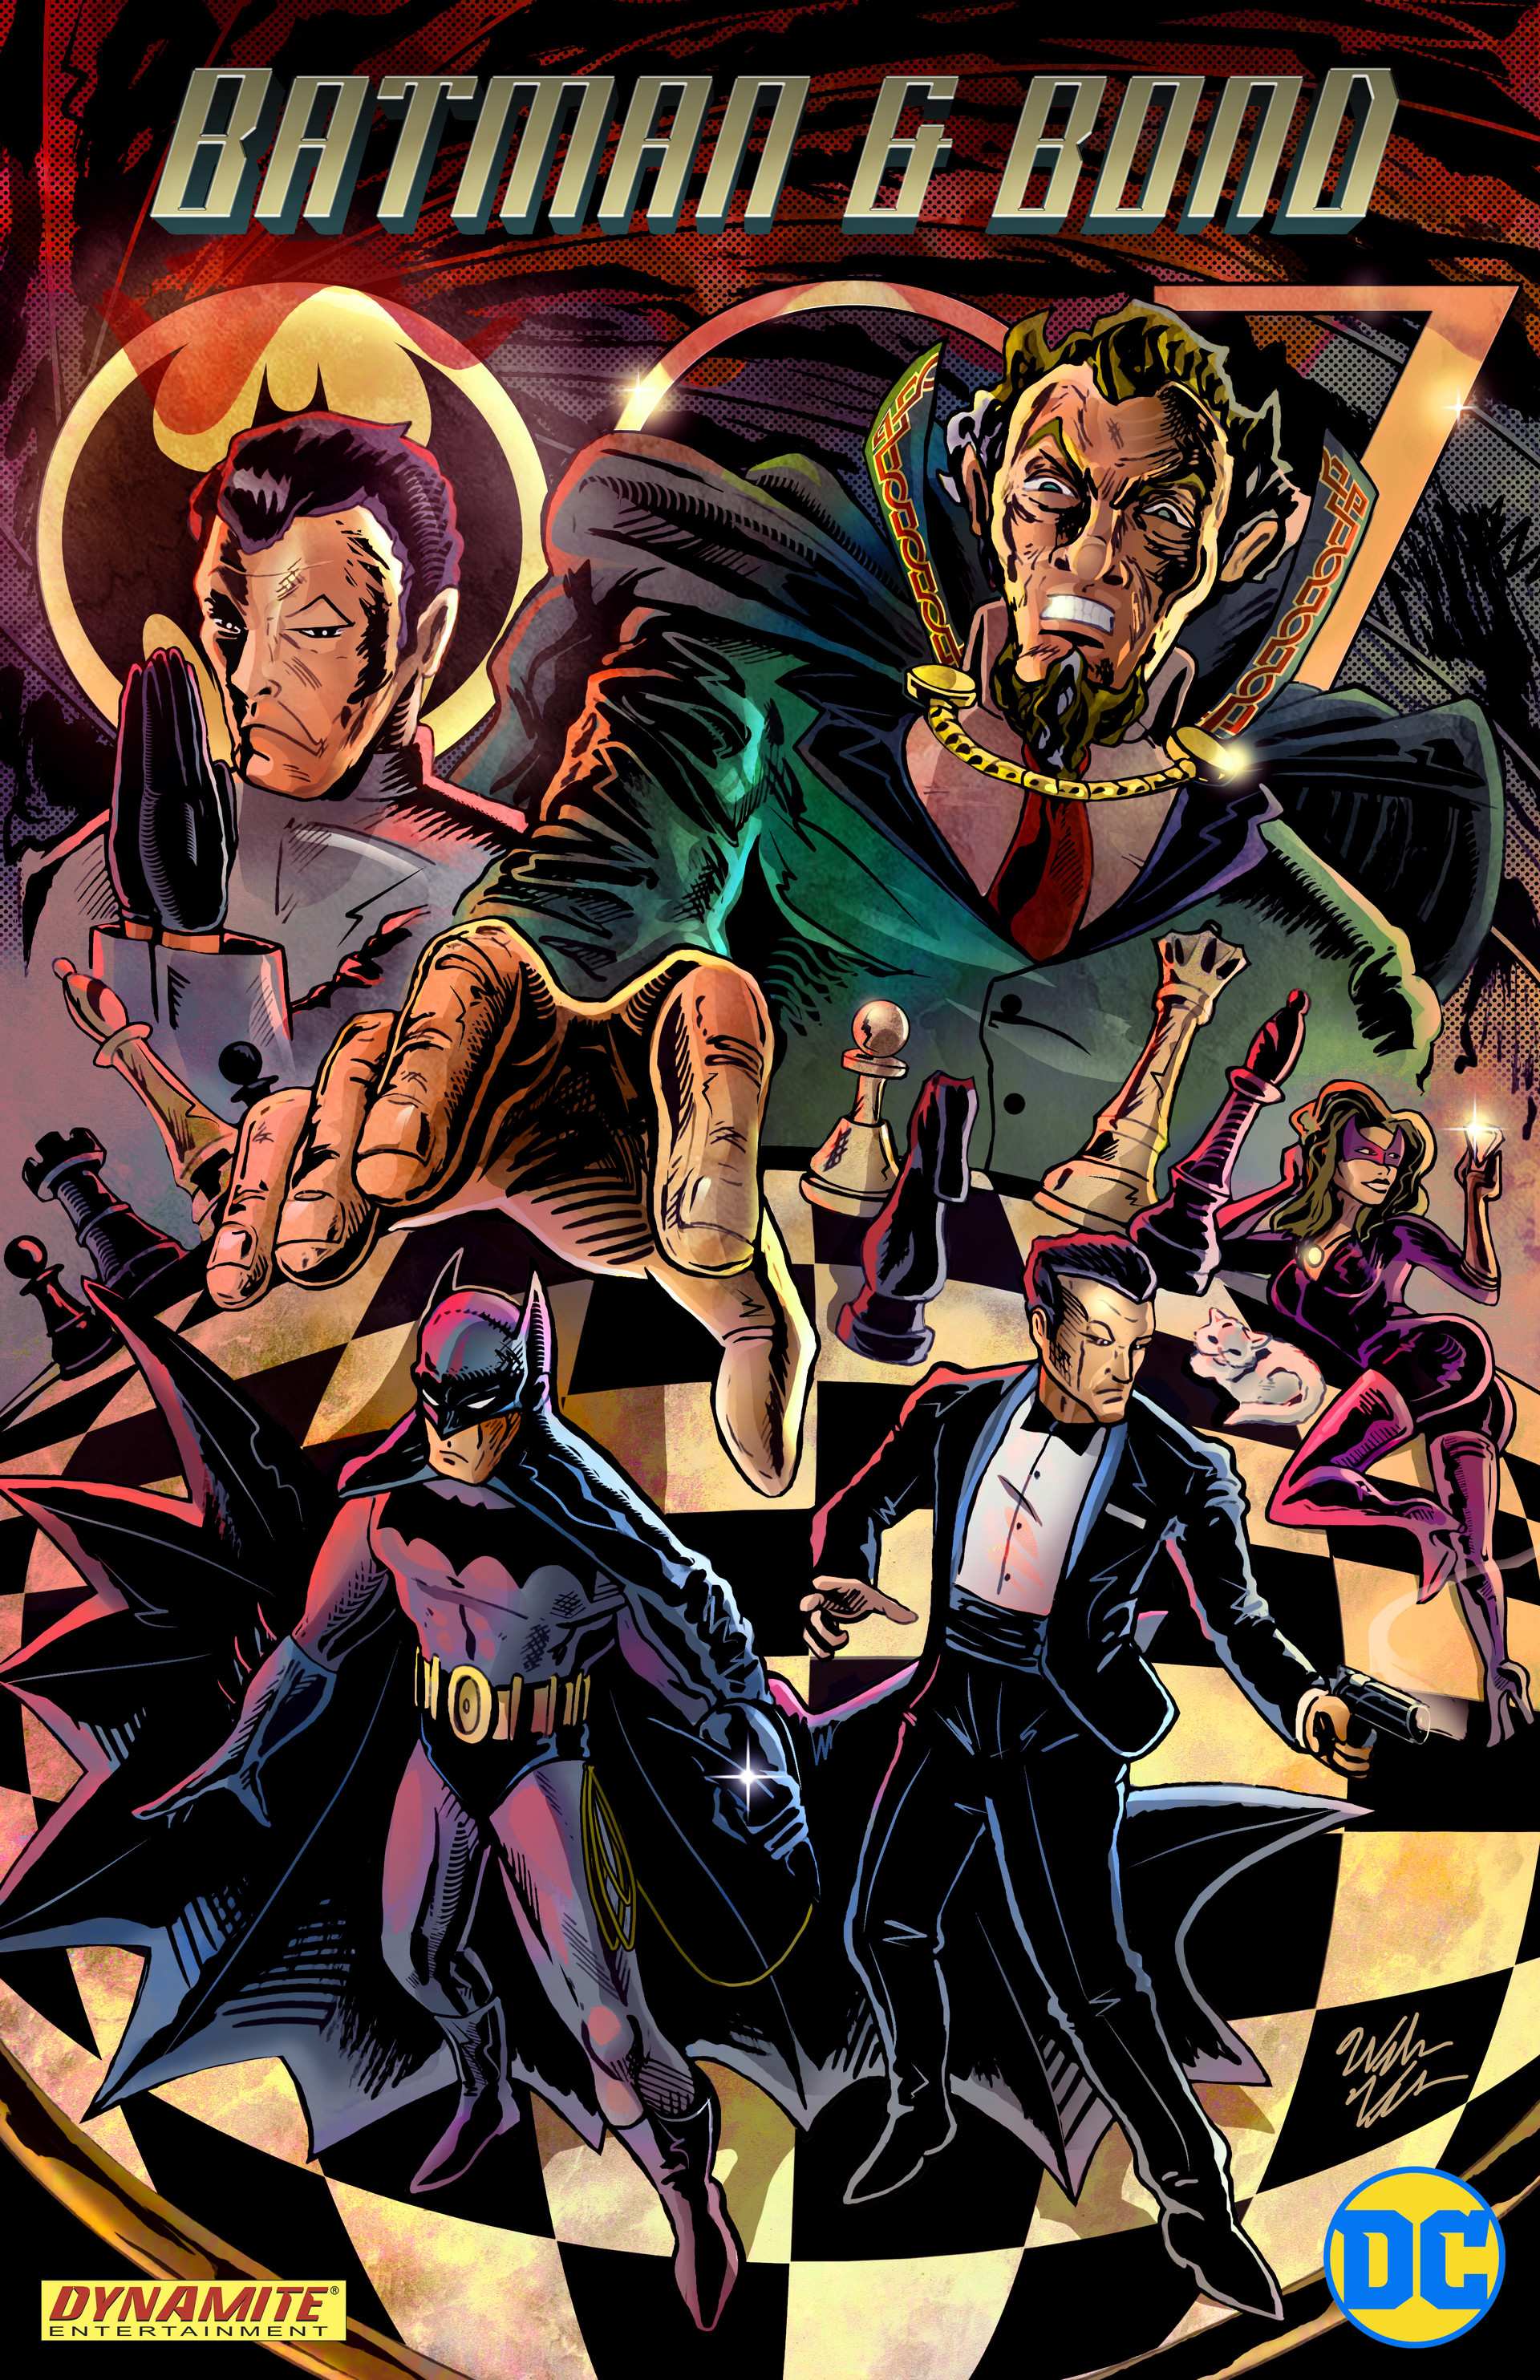 ArtStation - 'Batman & Bond: Pawns of the Knight' Issue #1